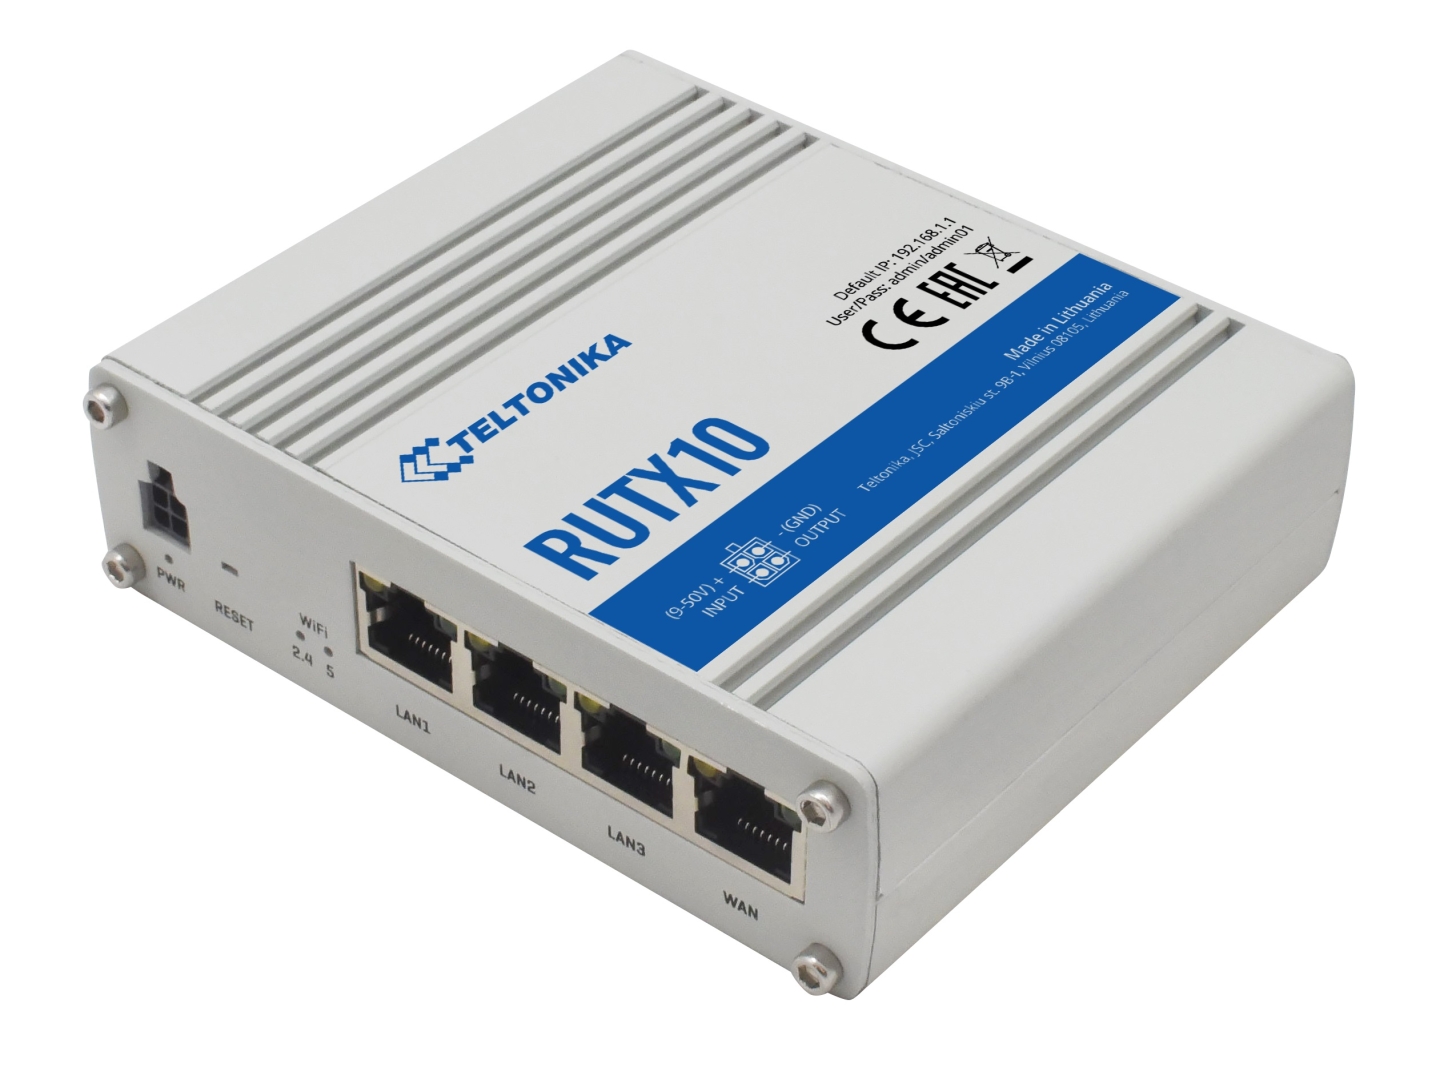 Teltonika RUTX10 Enterprise Router 4 Gigabit Ethernet, Dual-Band WiFi, and  Bluetooth